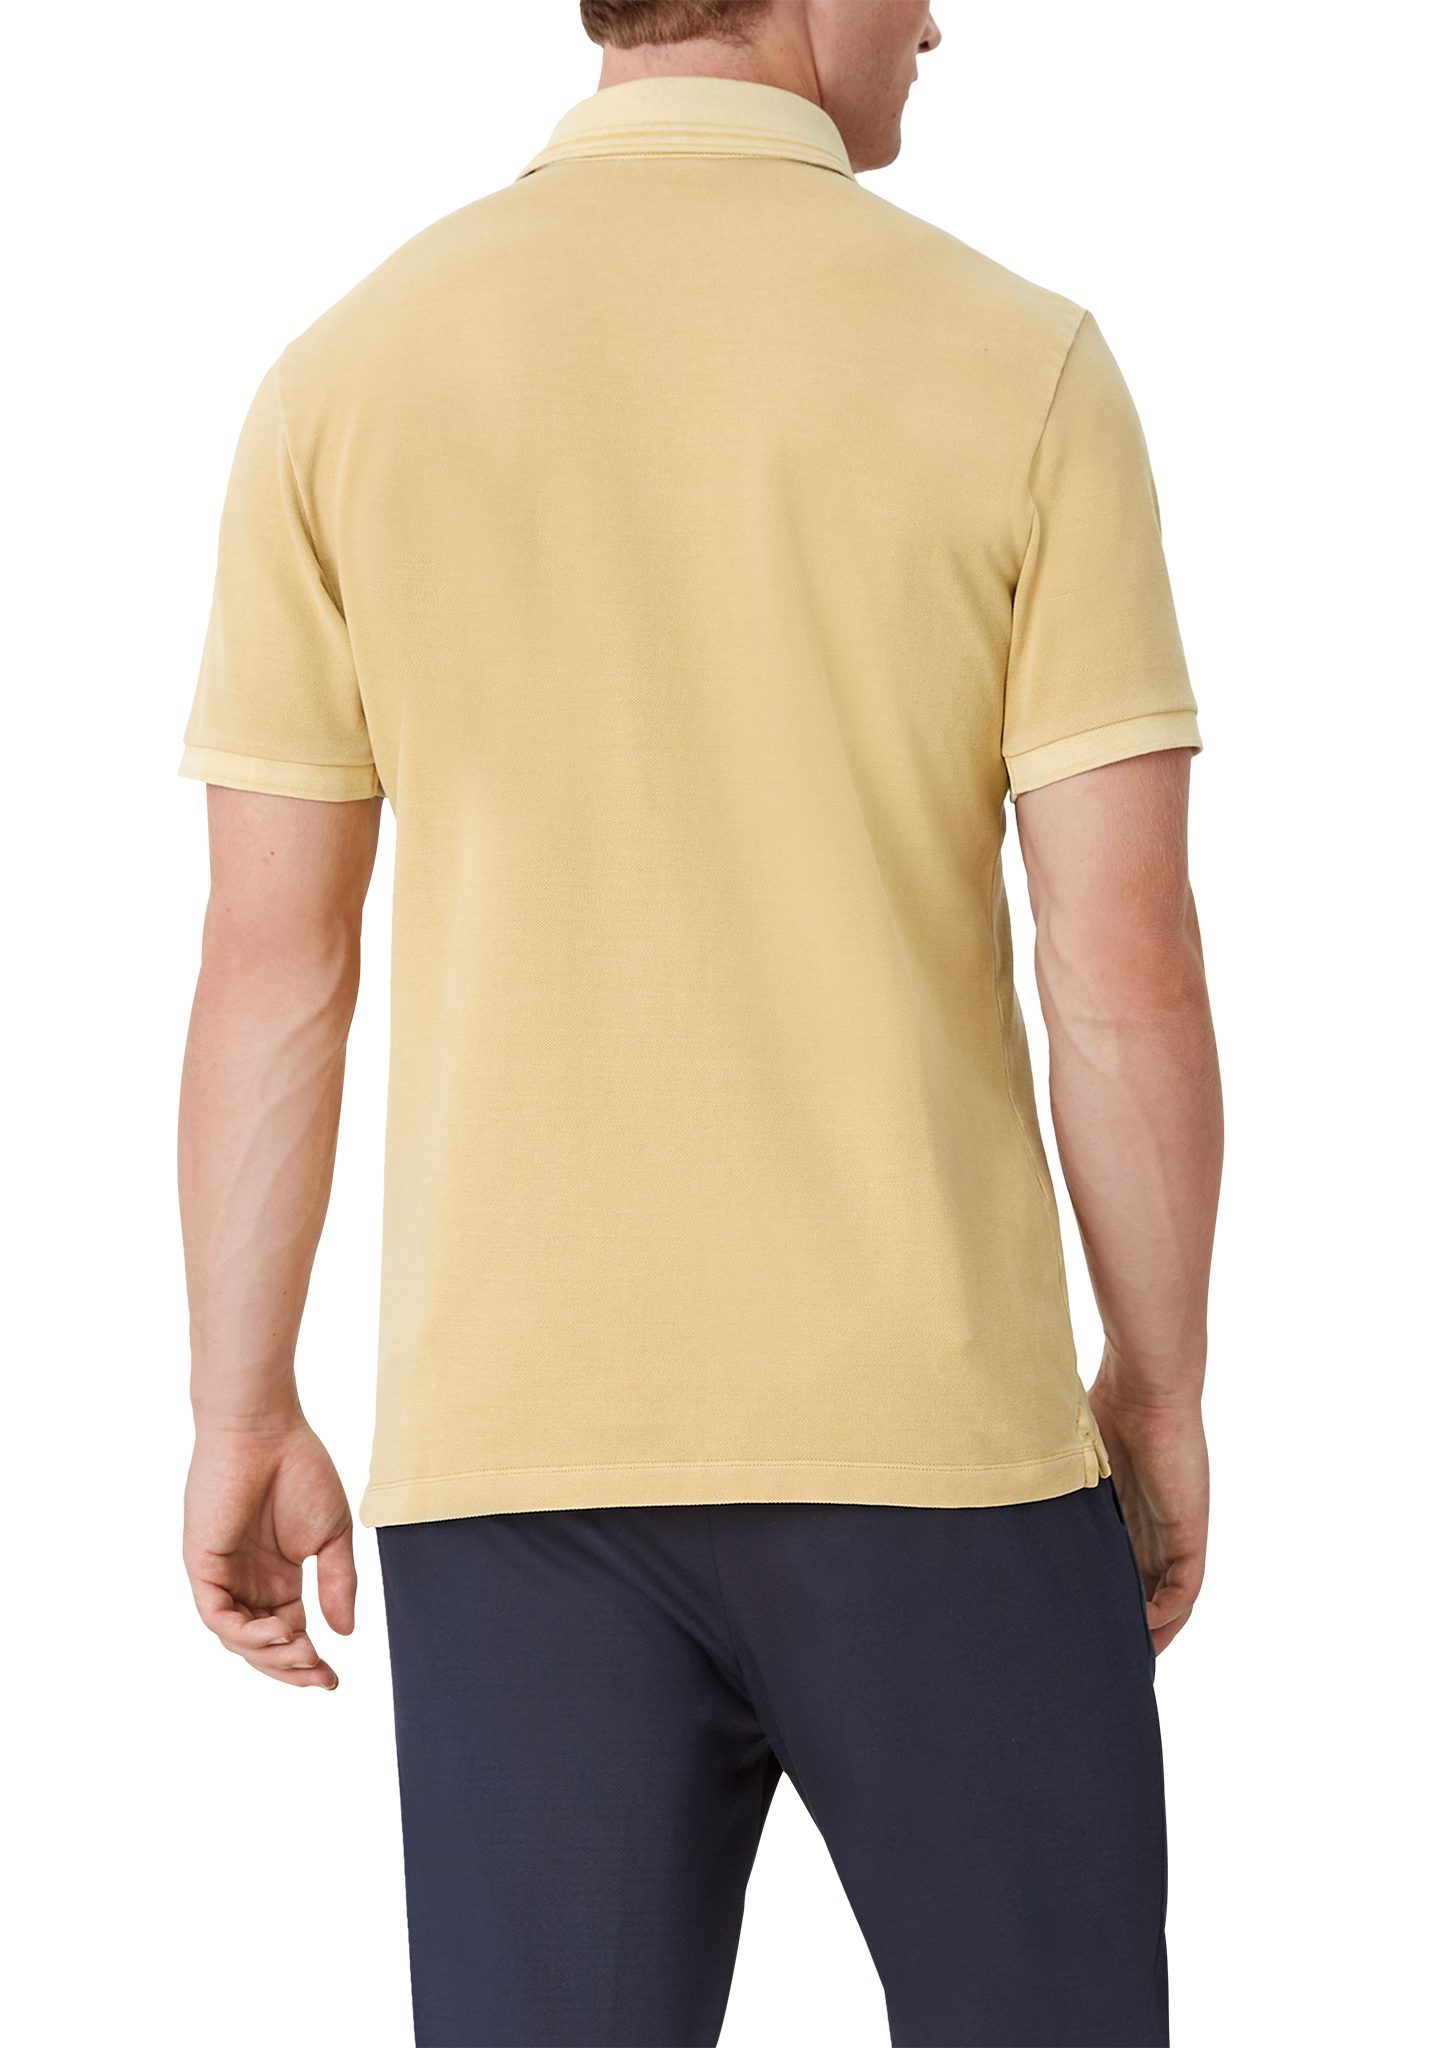 s.Oliver Waschung, Poloshirt yellow mit Kurzarmshirt Label-Patch Wascheffekt